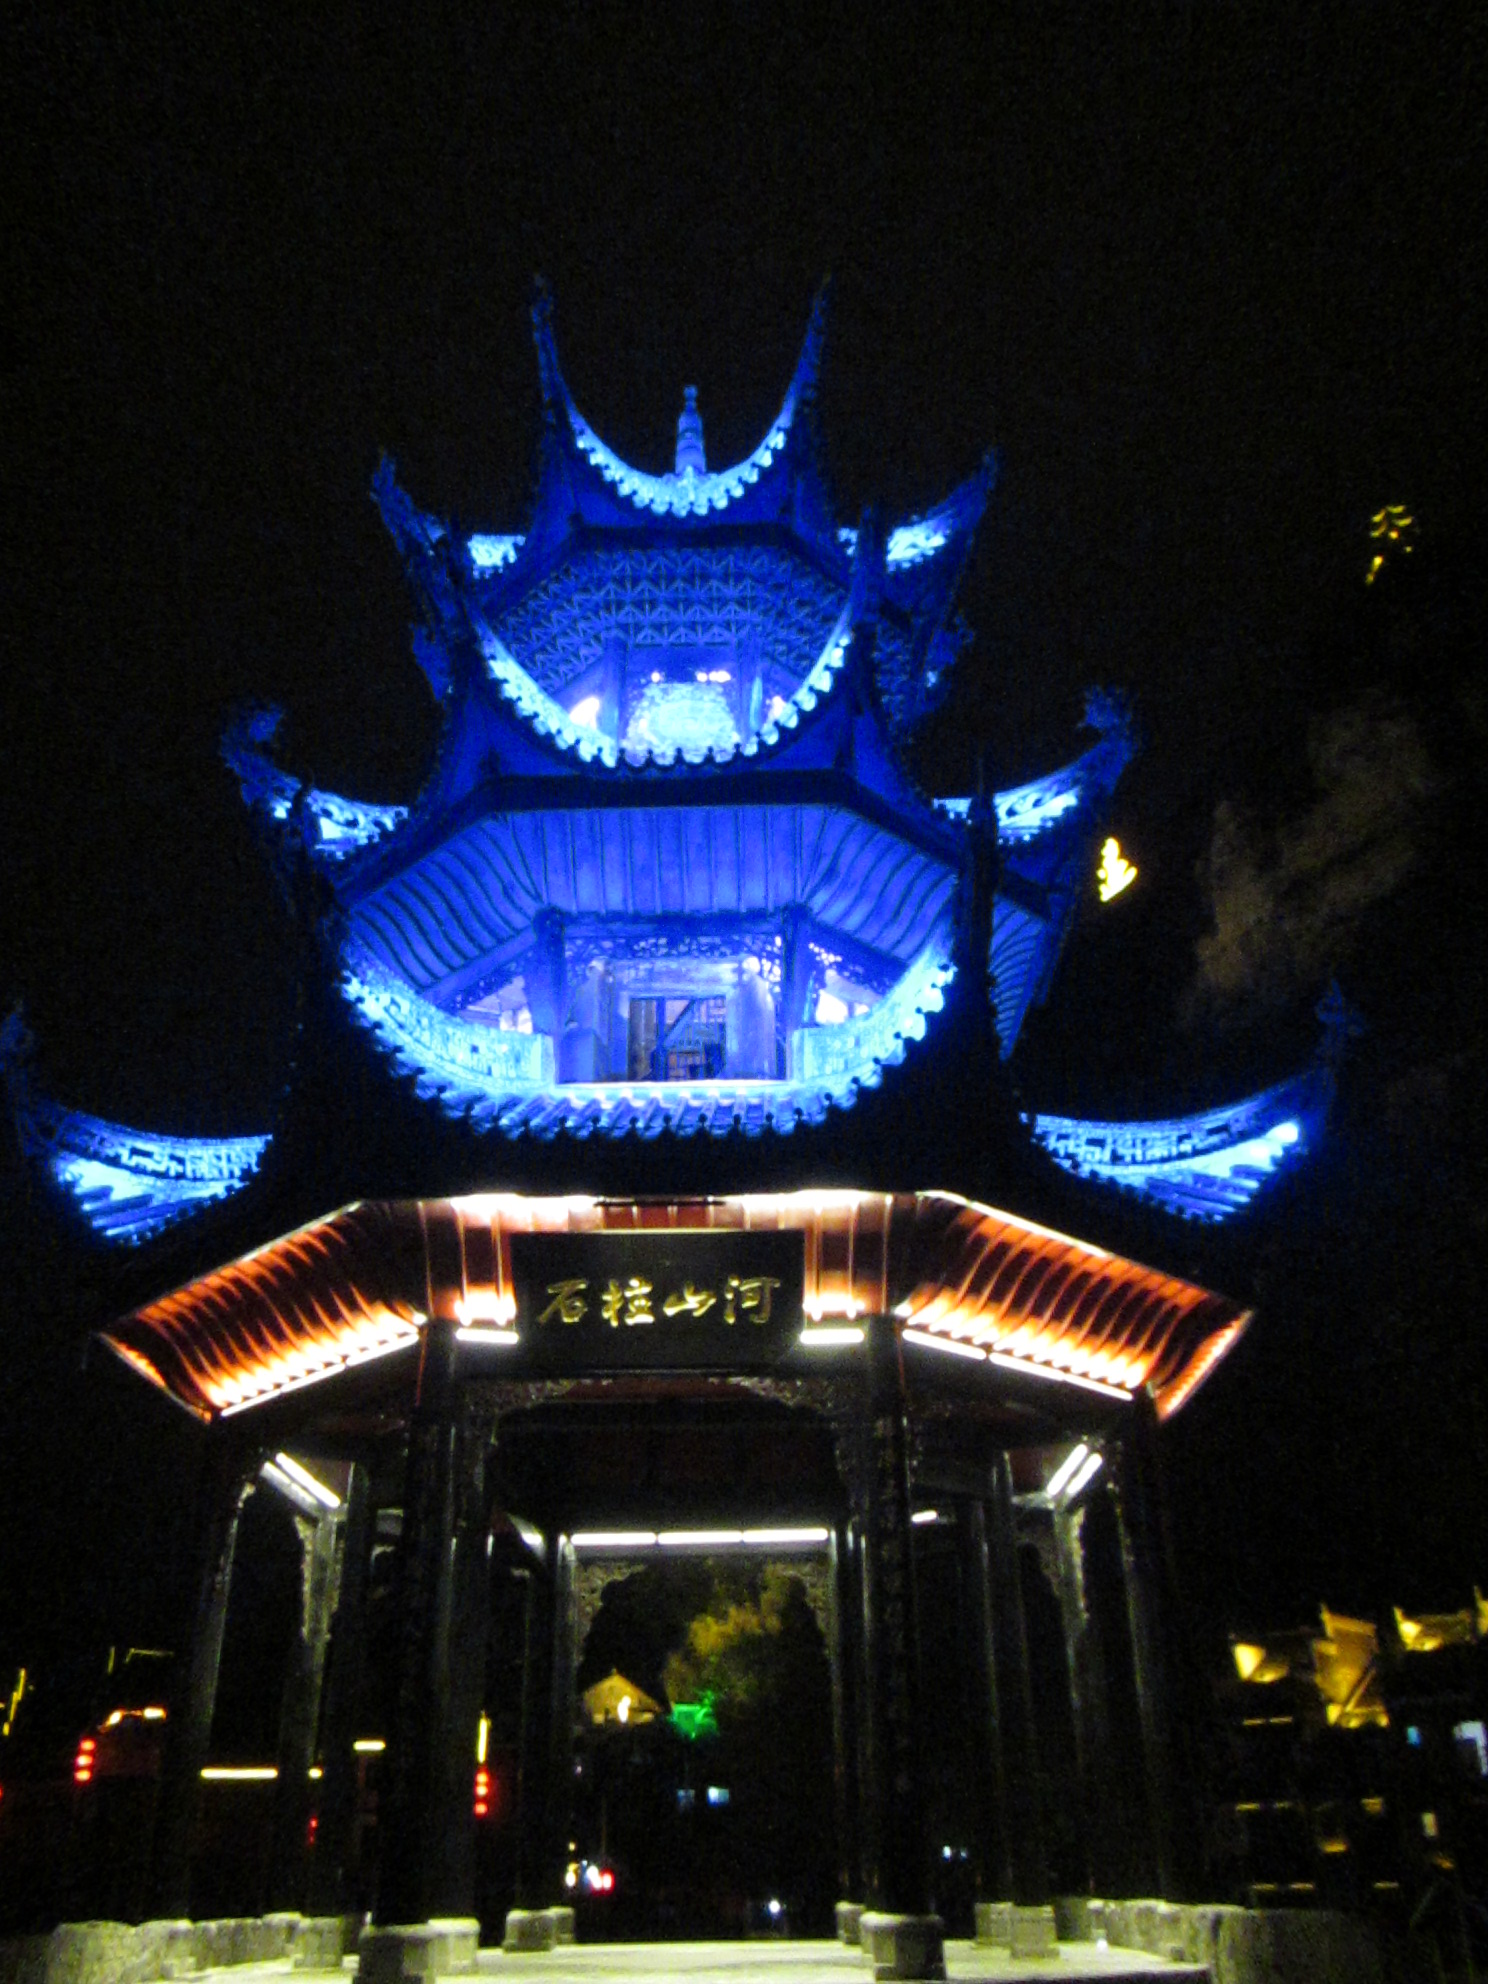 A close-up of the same pagoda